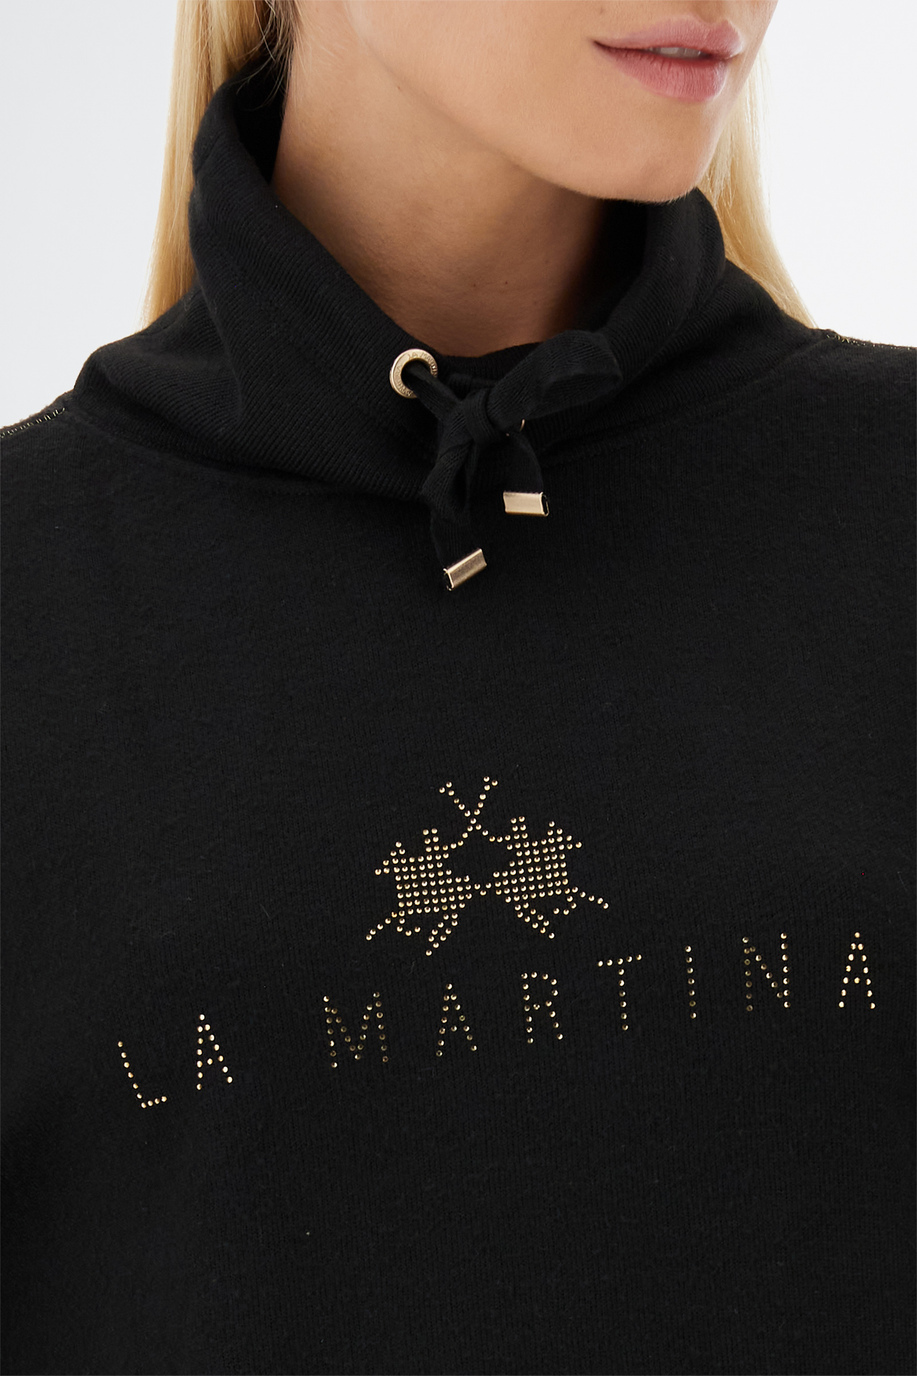 Damen Sweatshirt Baumwolle Rollkragen Timeless Regular Fit - Sweatshirts | La Martina - Official Online Shop